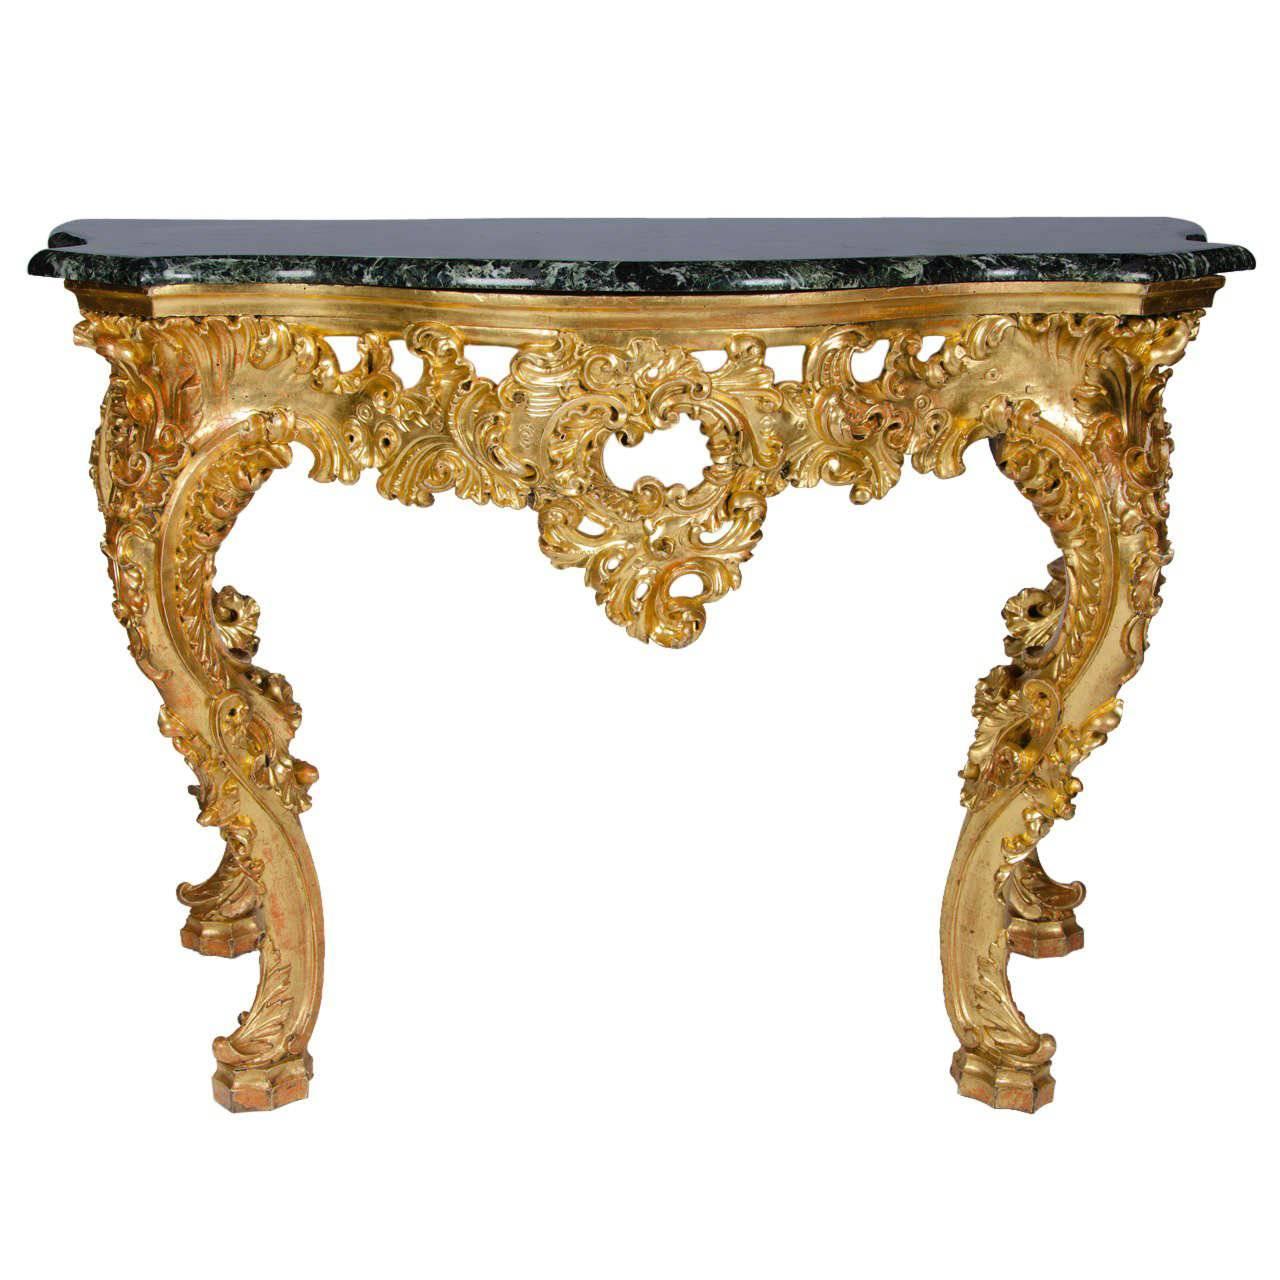 19th Century Rococo Revival Console Table For Sale